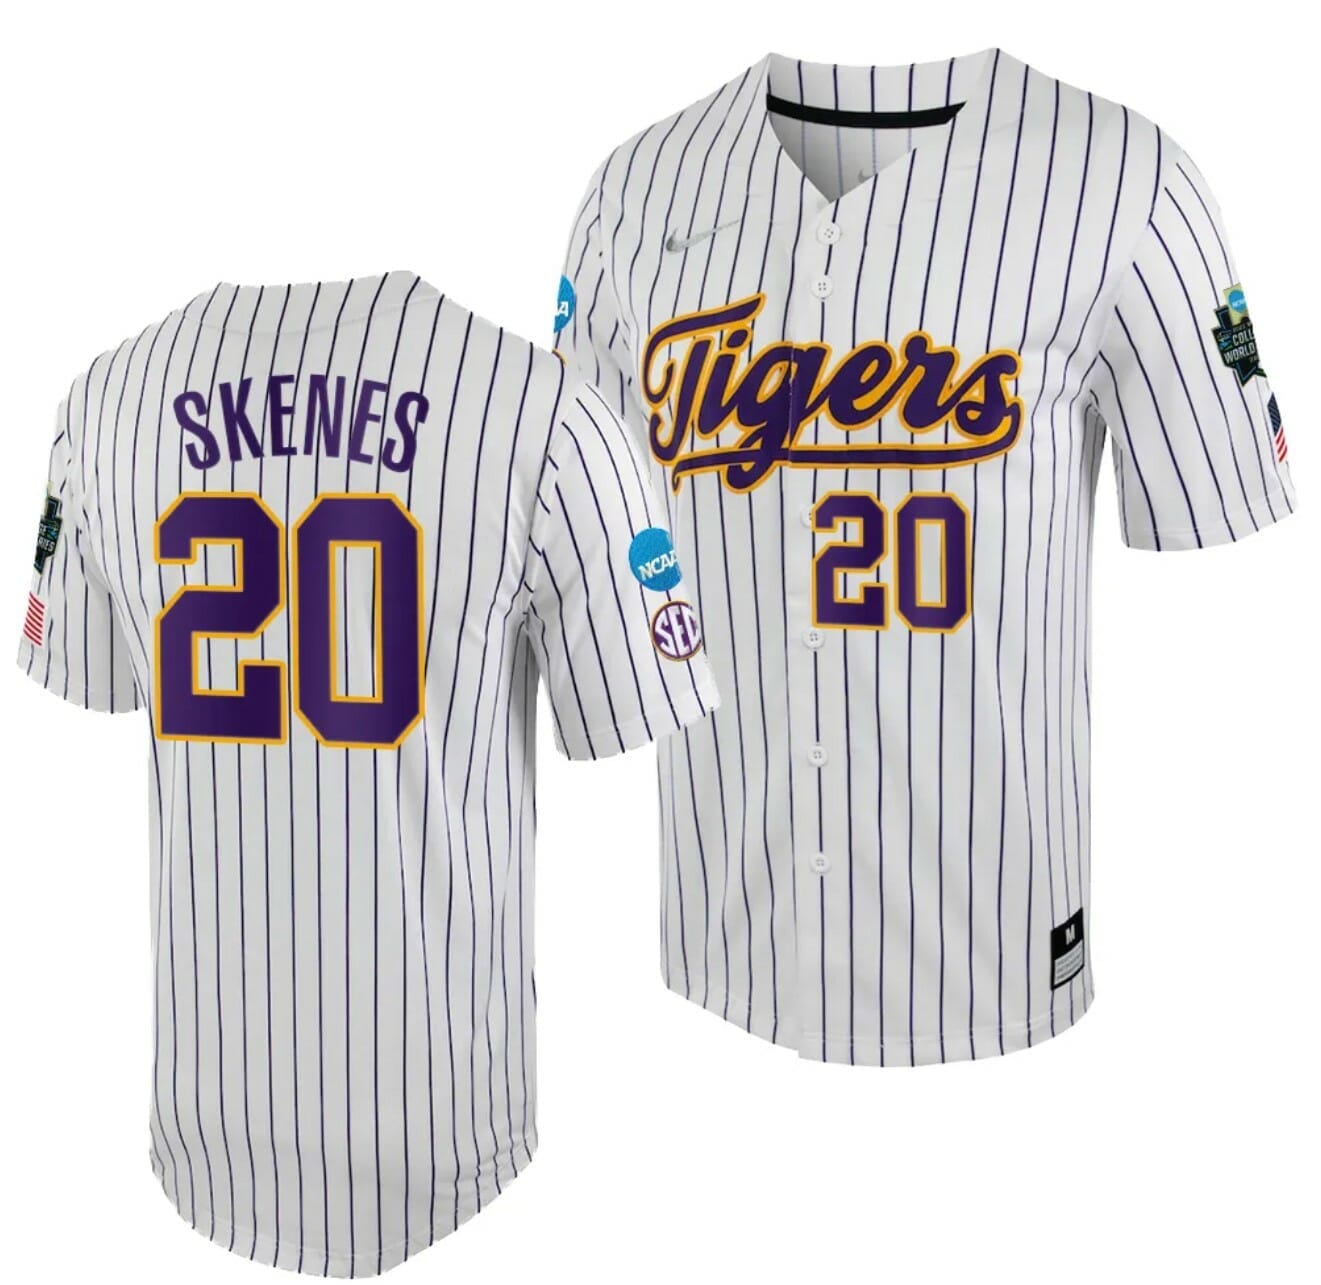 Hot] Buy New LSU Tigers Baseball Jersey